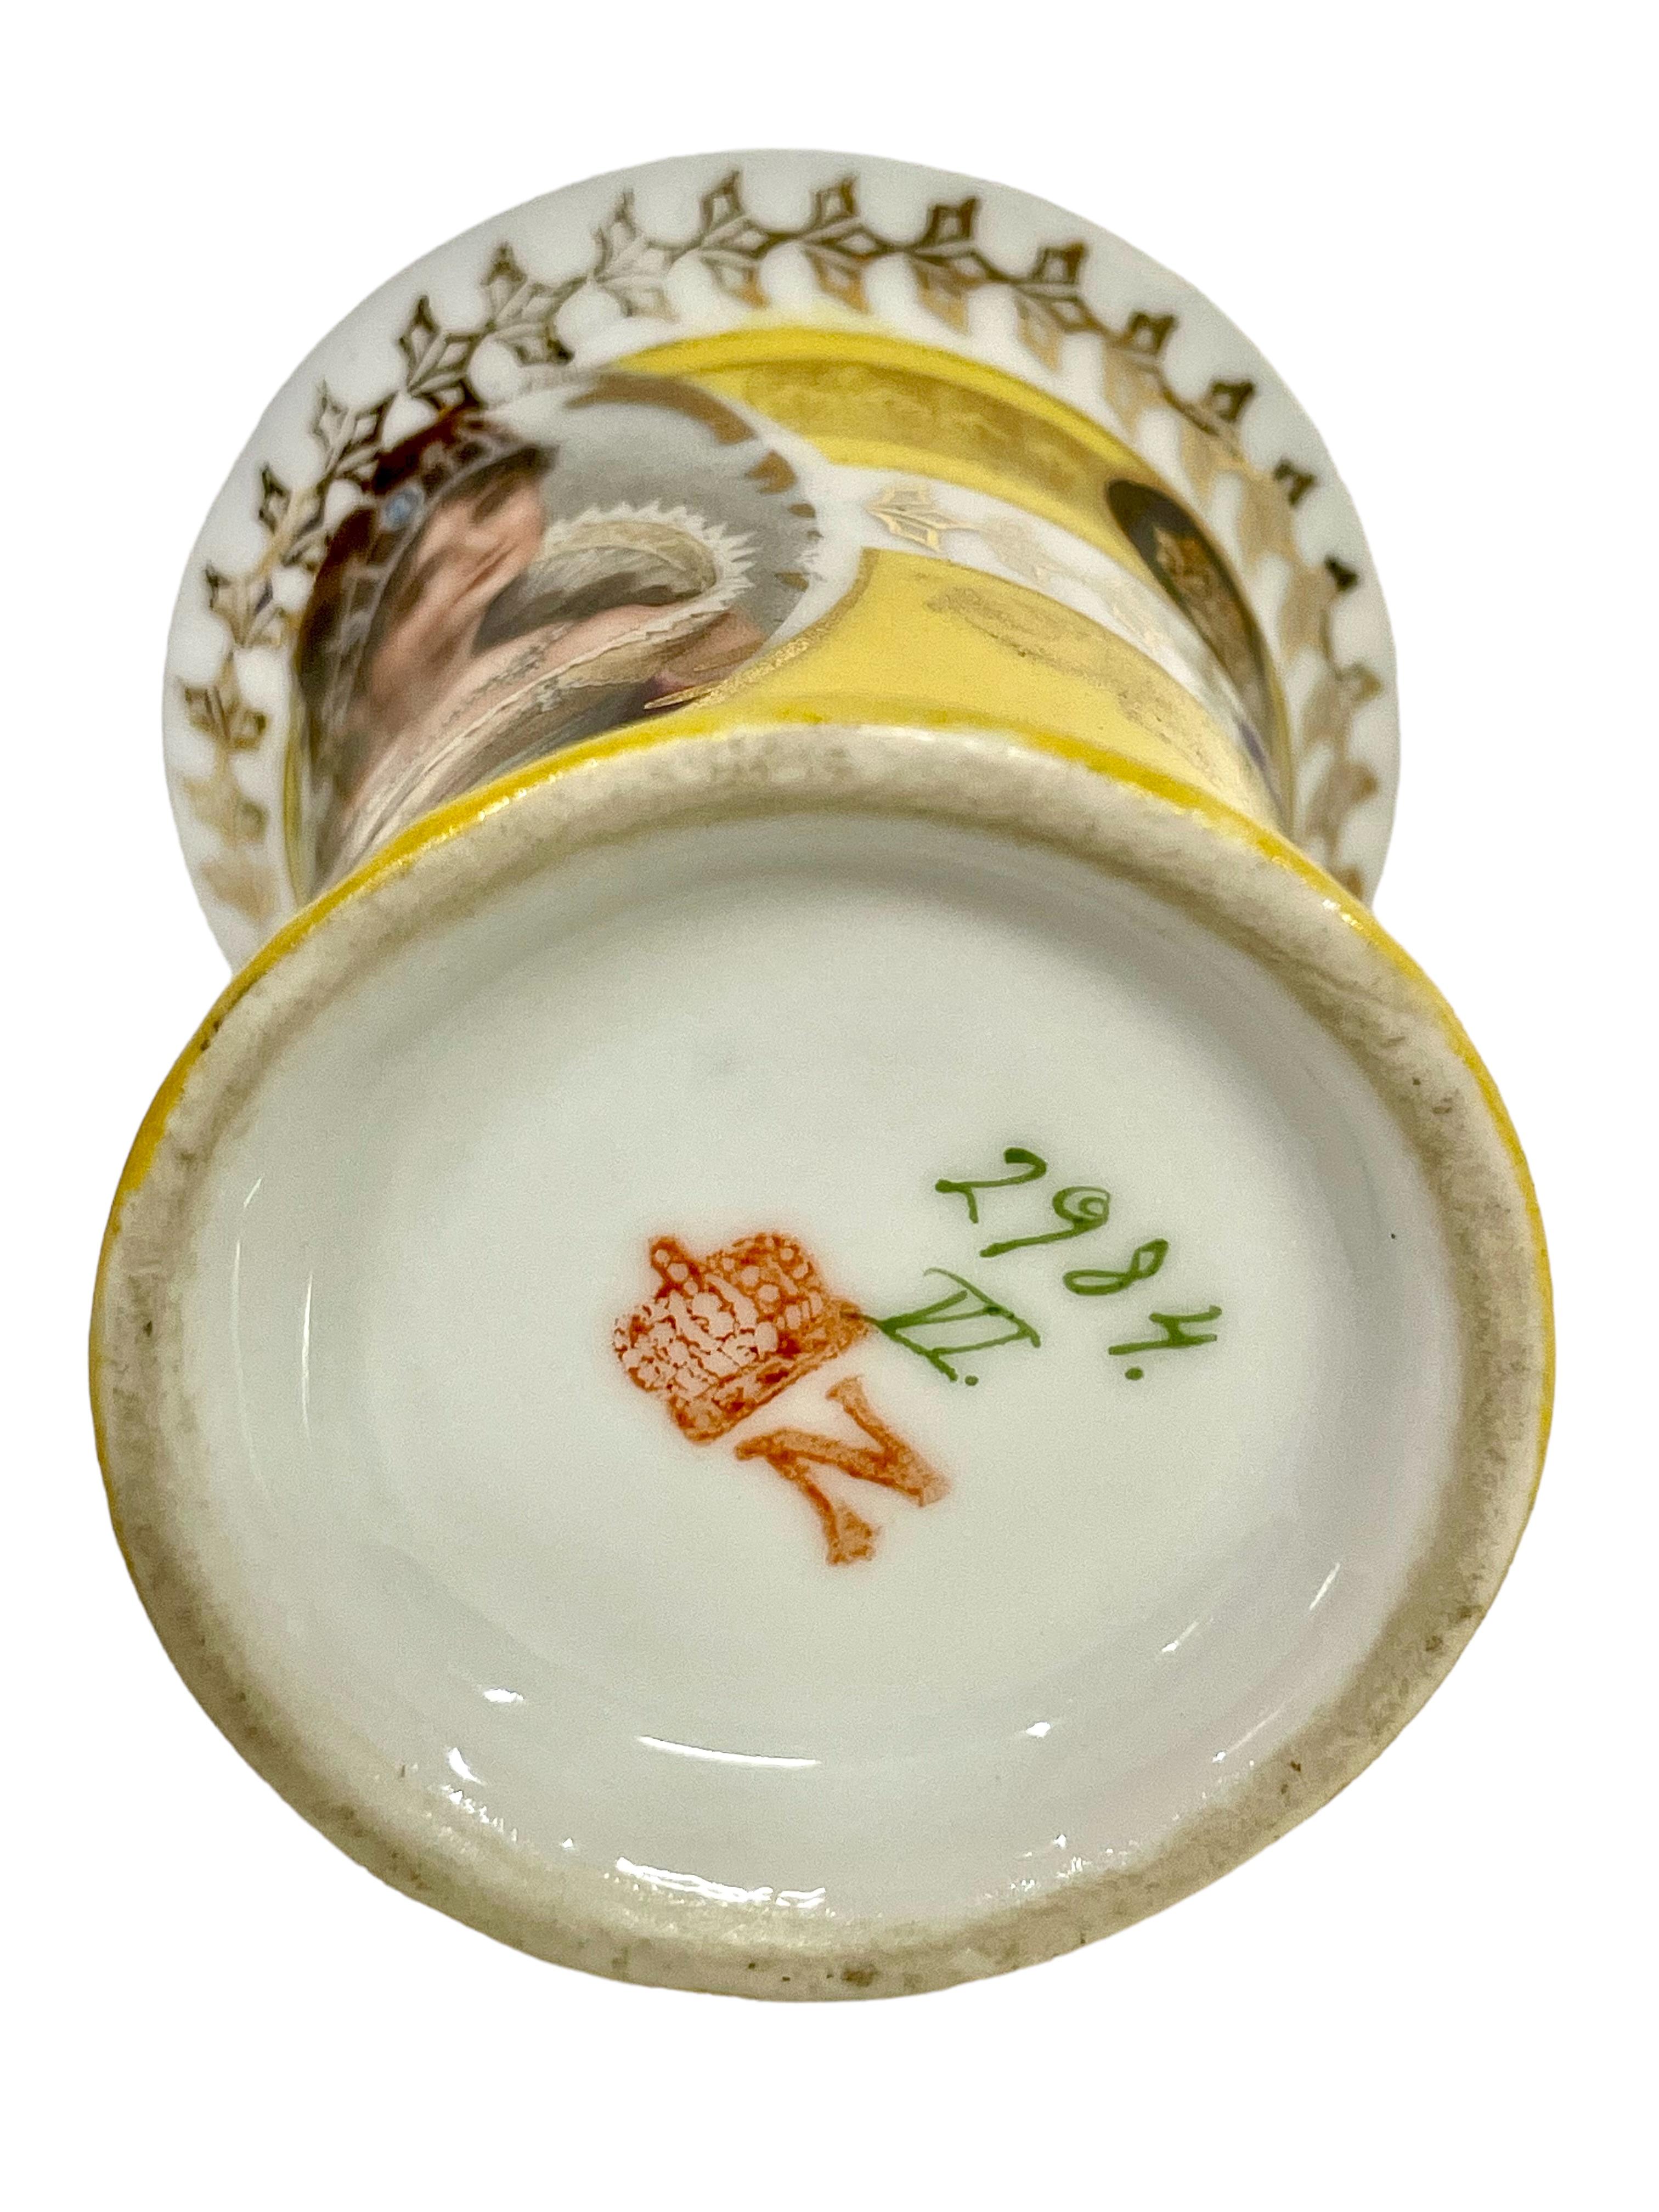 Paris Porcelain Teacup and Saucer Depicting Empress Josephine For Sale 1